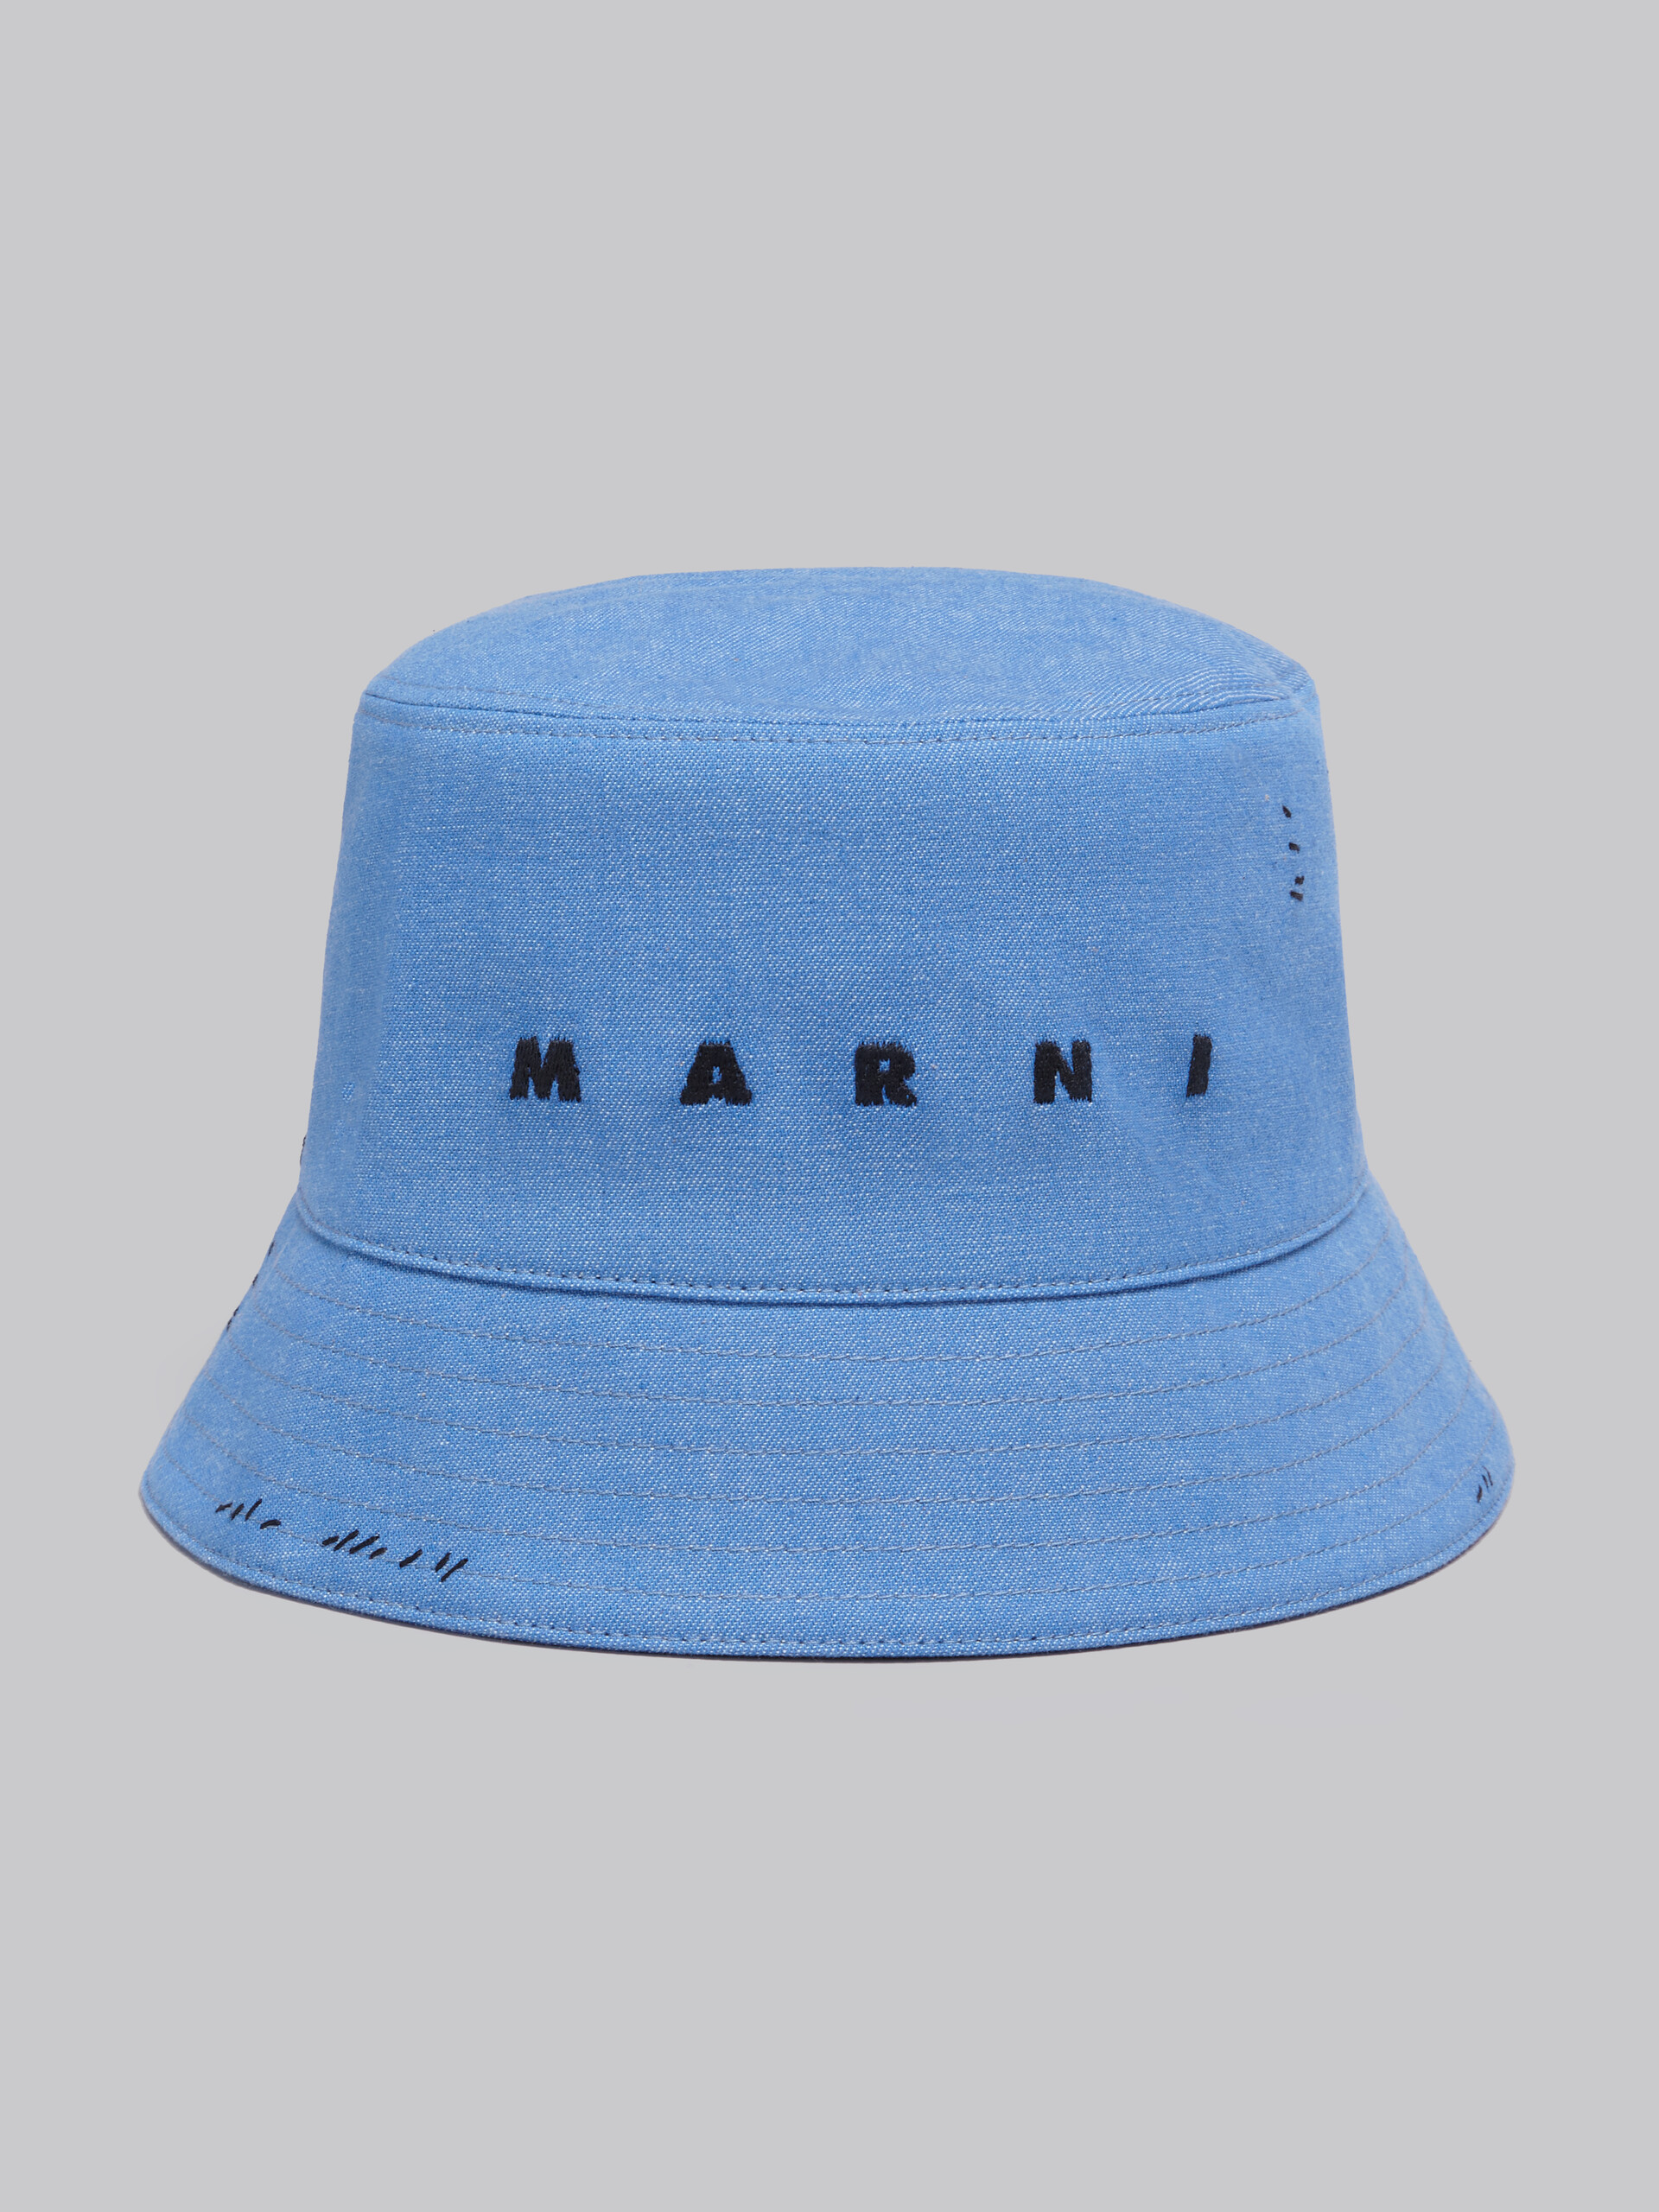 Bob en denim bleu avec effet raccommodé Marni - Chapeau - Image 4